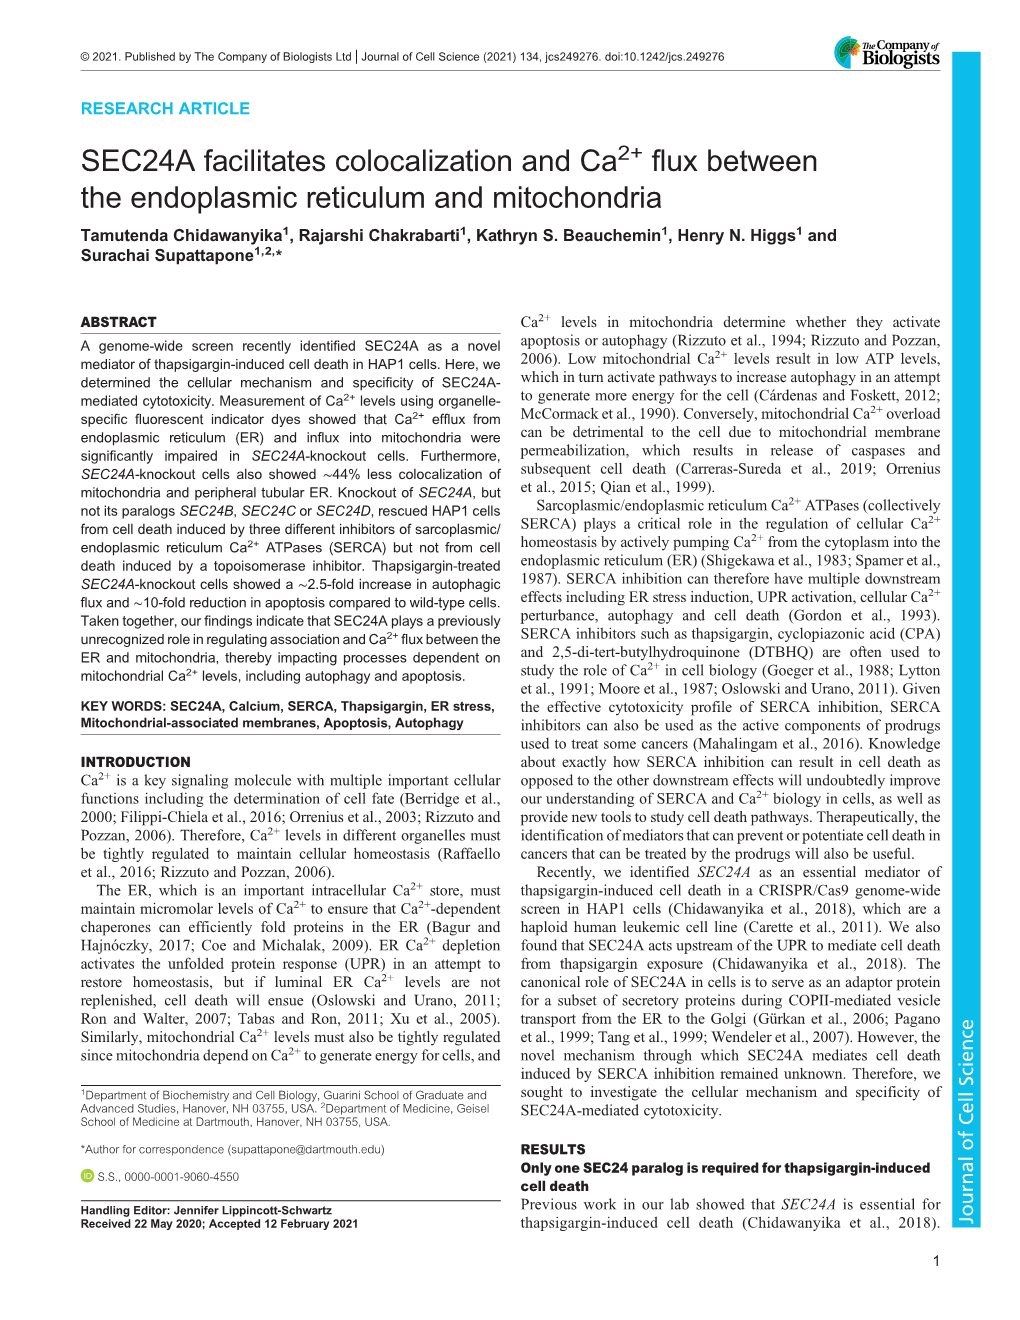 SEC24A Facilitates Colocalization and Ca2+ Flux Between the Endoplasmic Reticulum and Mitochondria Tamutenda Chidawanyika1, Rajarshi Chakrabarti1, Kathryn S